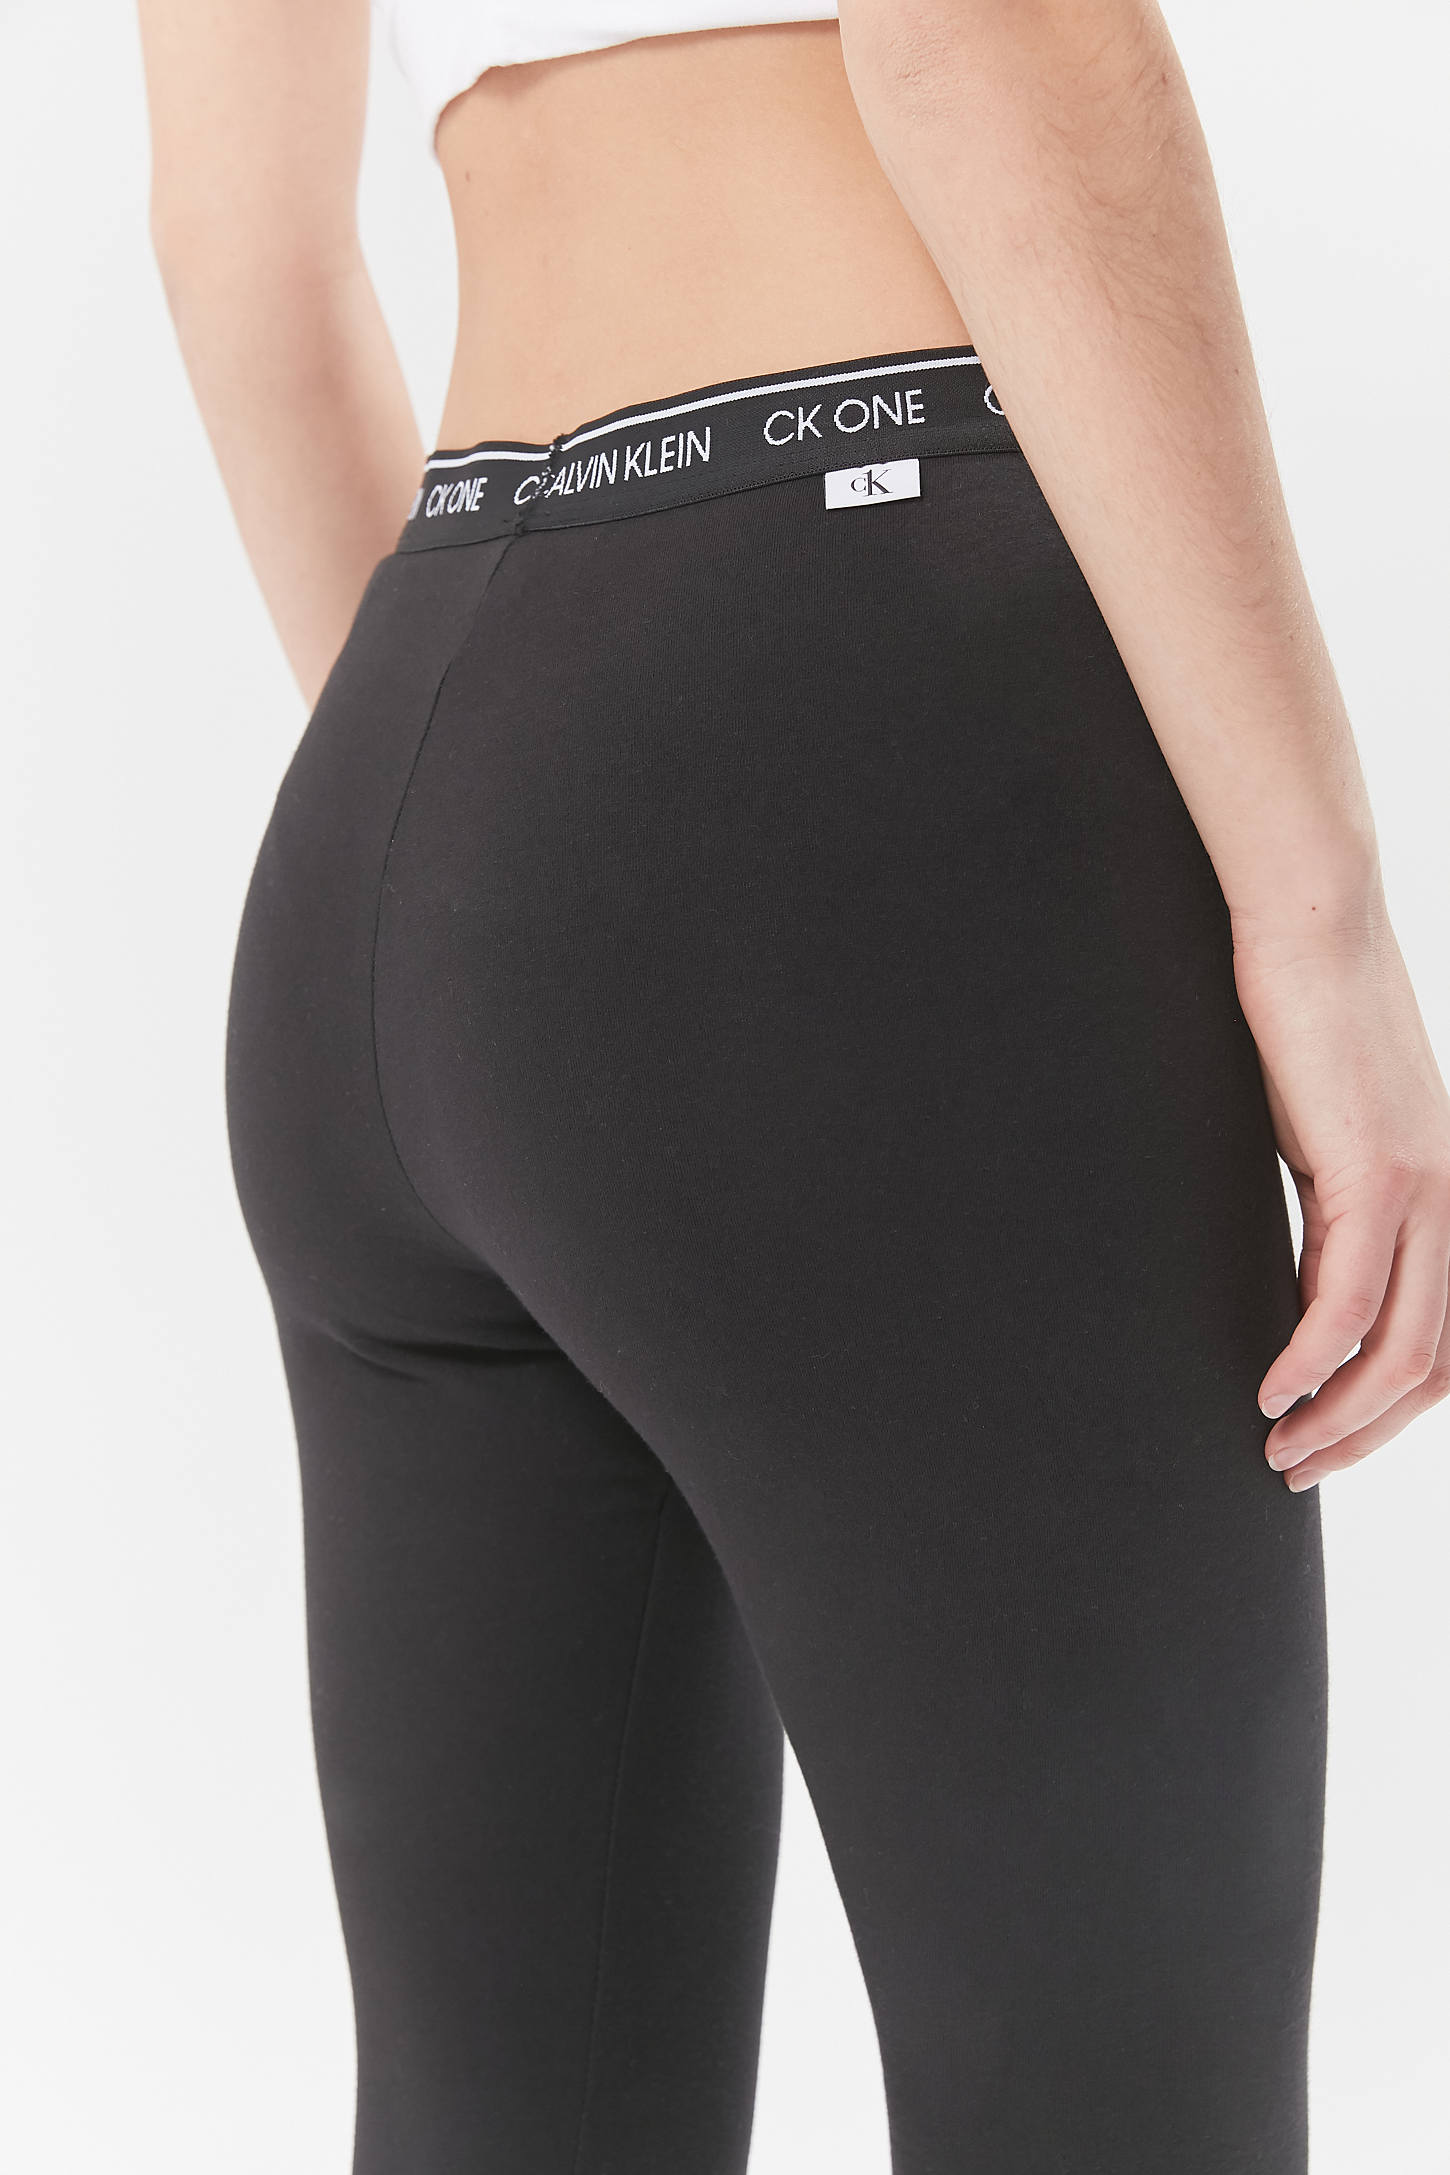 Calvin Klein Jeans logo legging shorts in black | ASOS